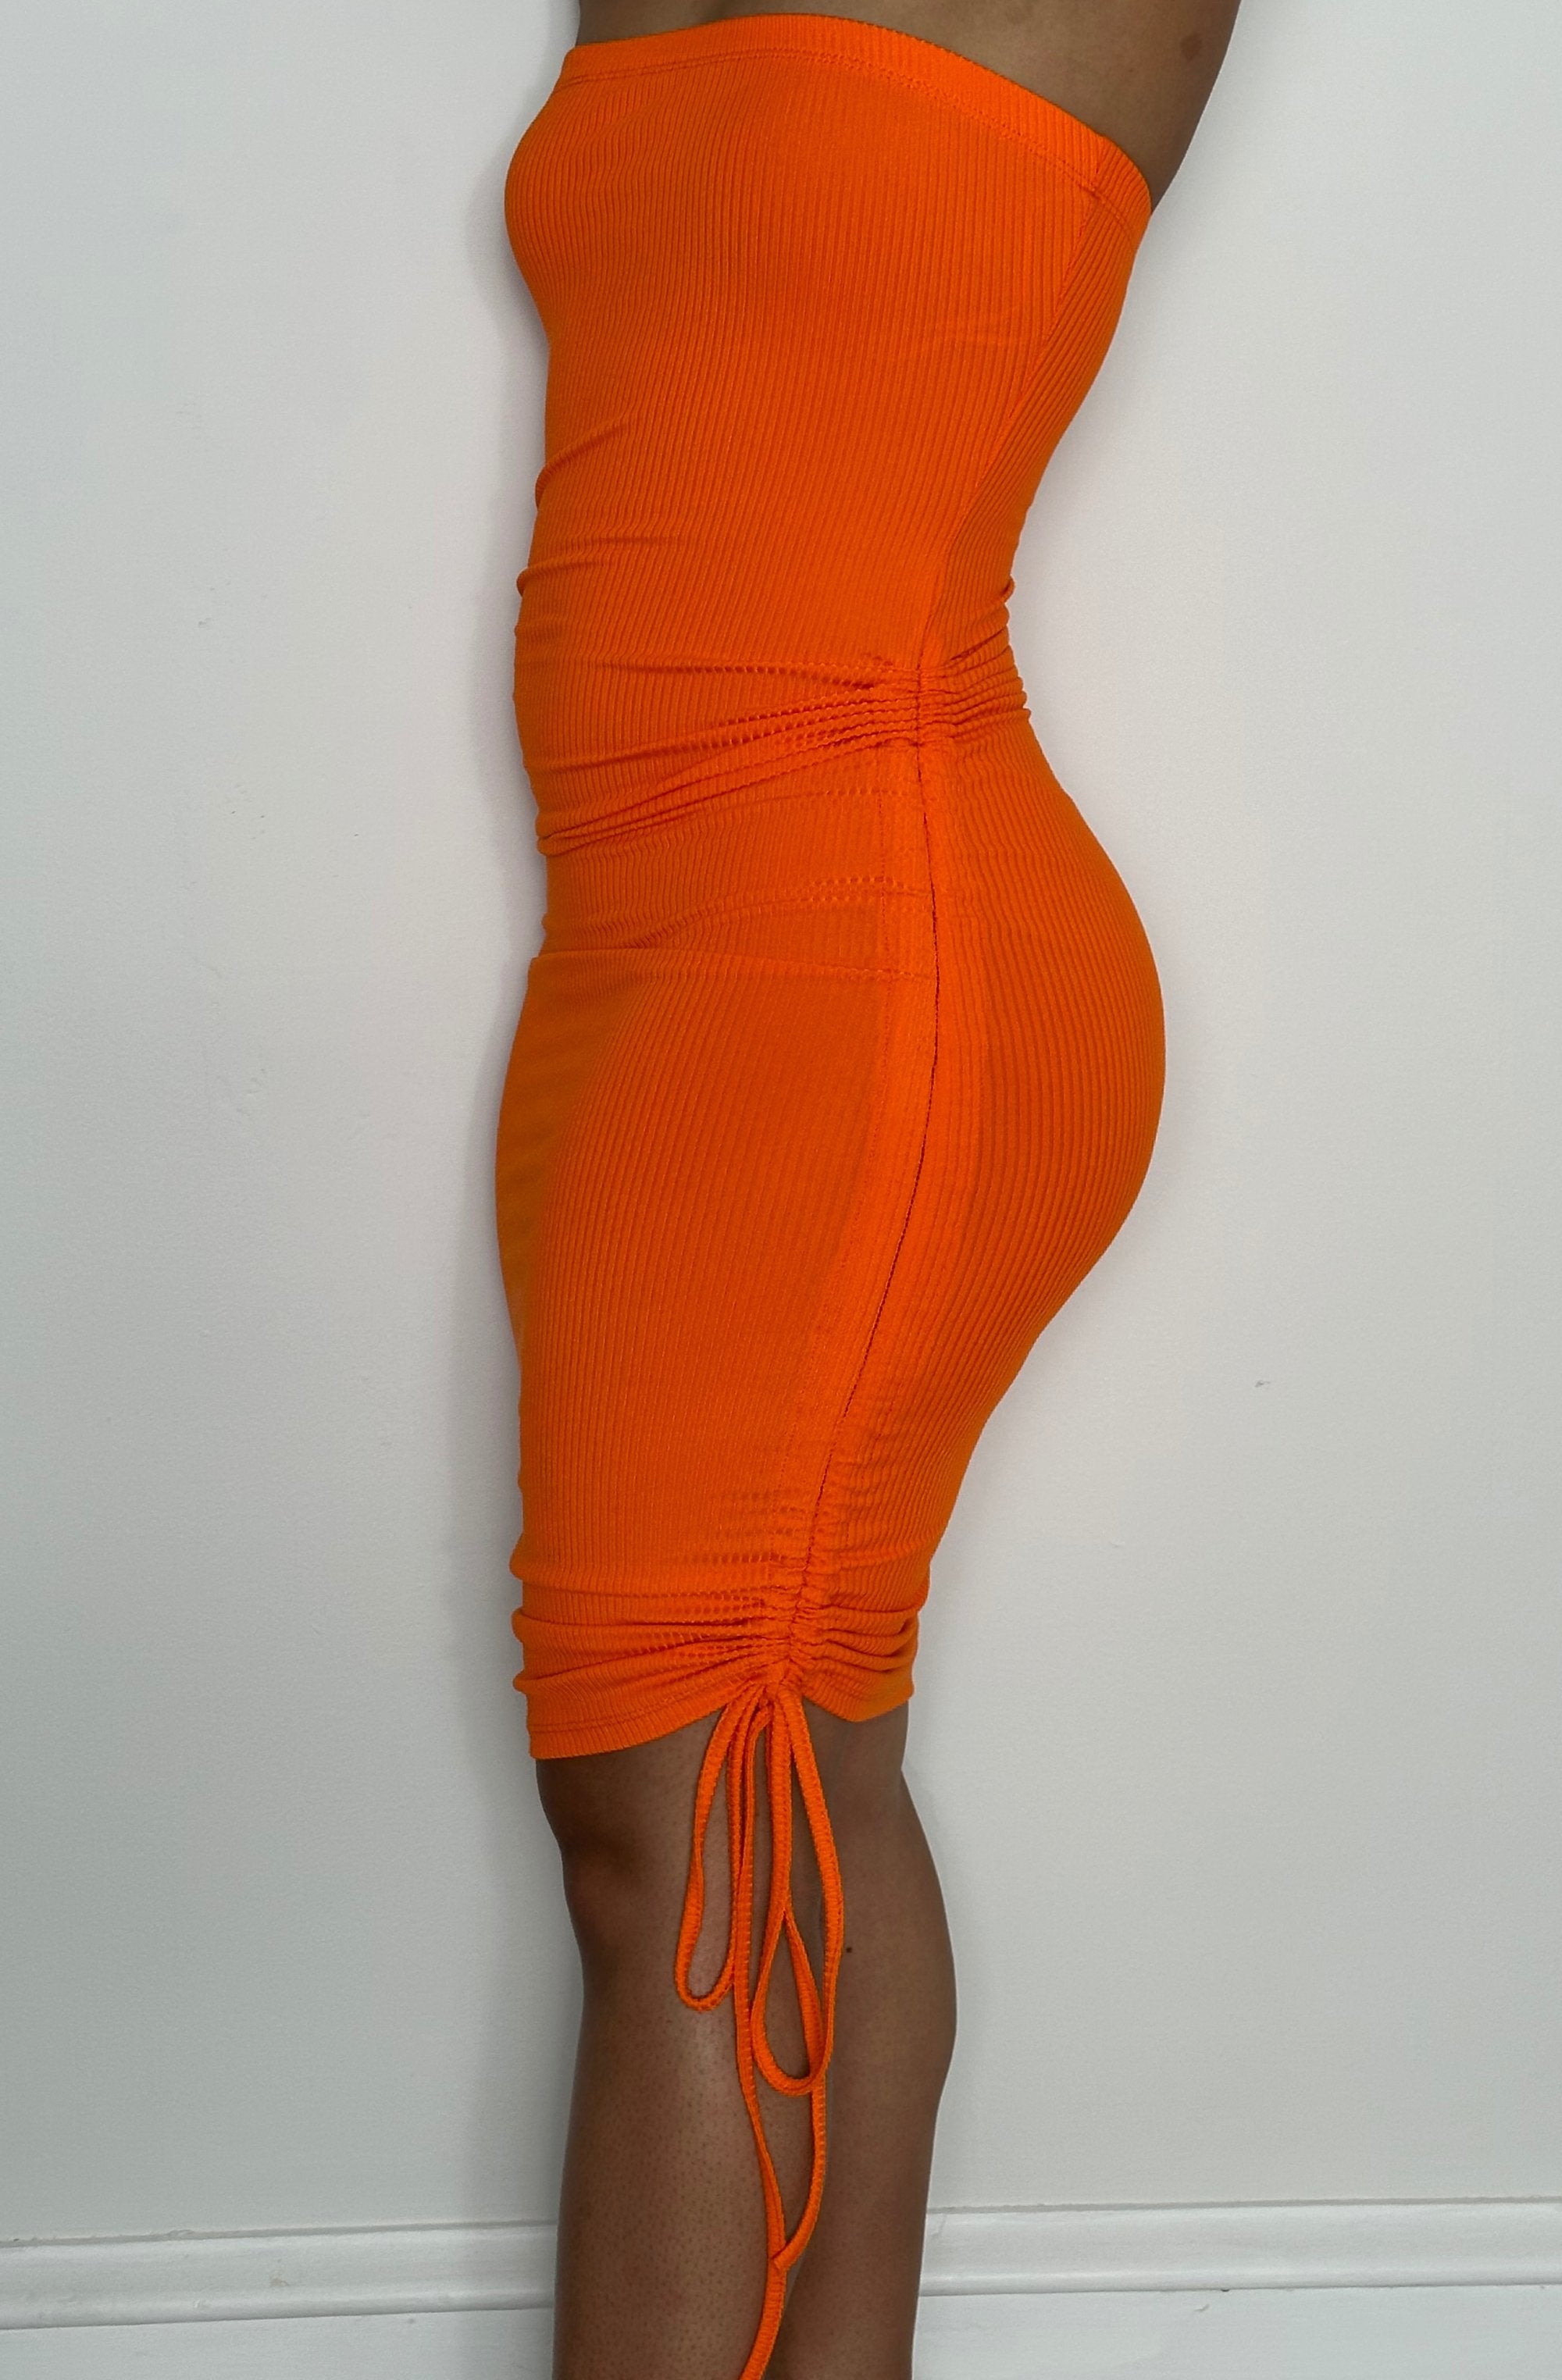 Orange Strapless Dress